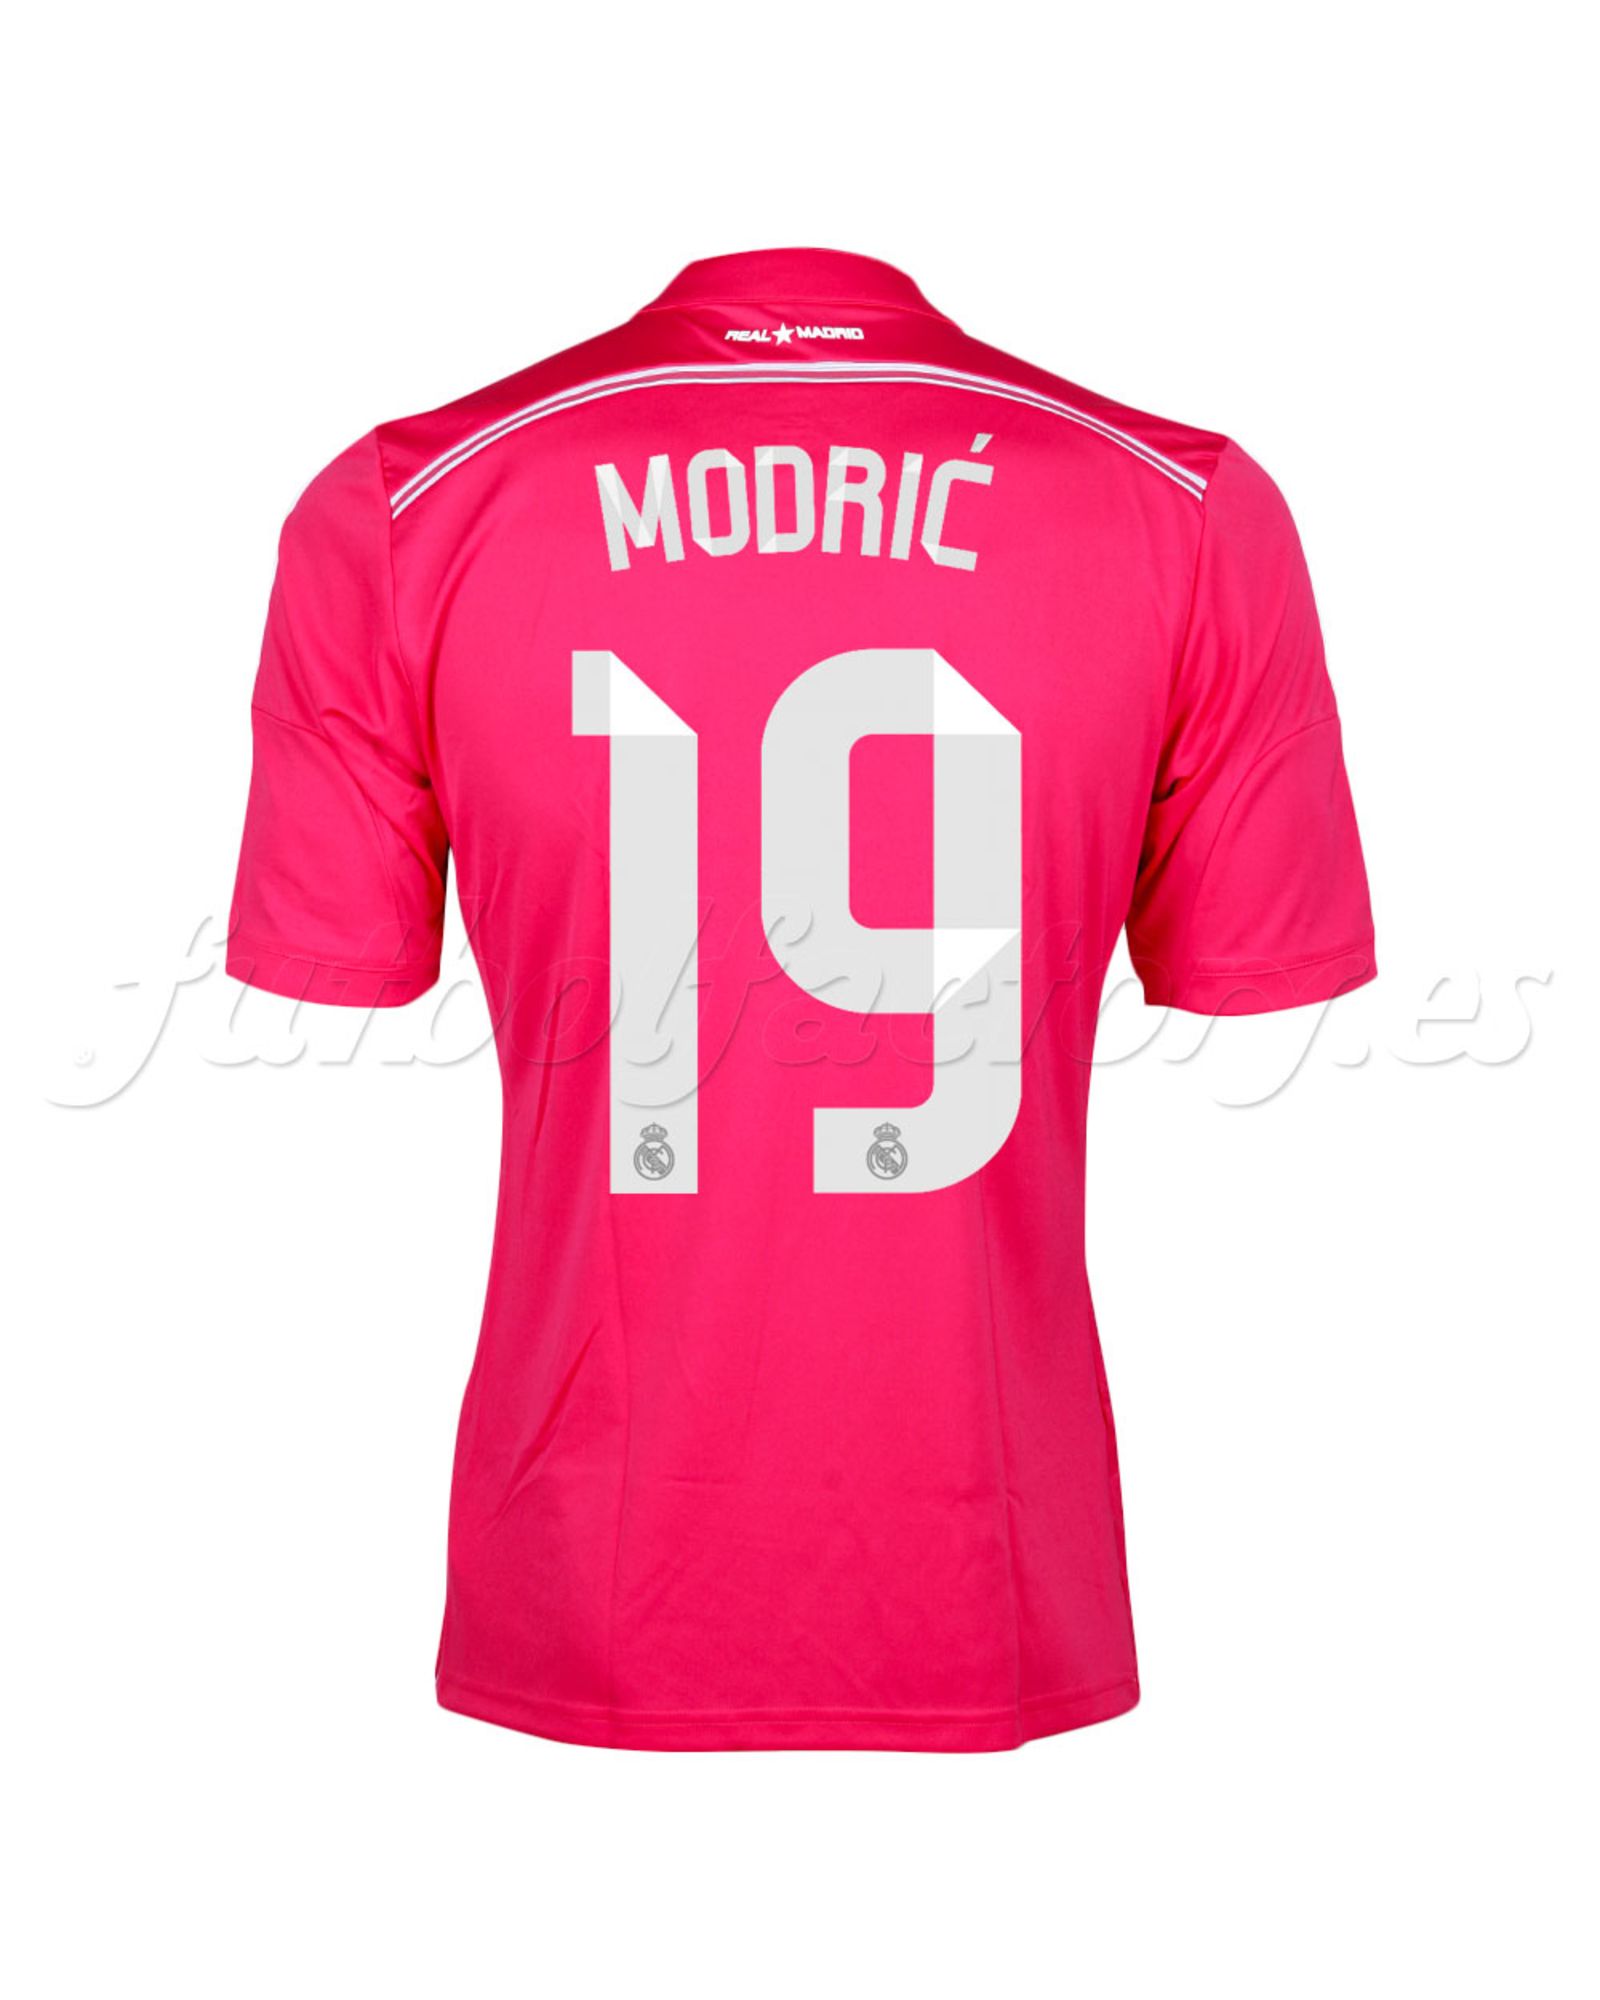 Camiseta Real Madrid  2ª  Modric  2014/2015  Rosa - Fútbol Factory